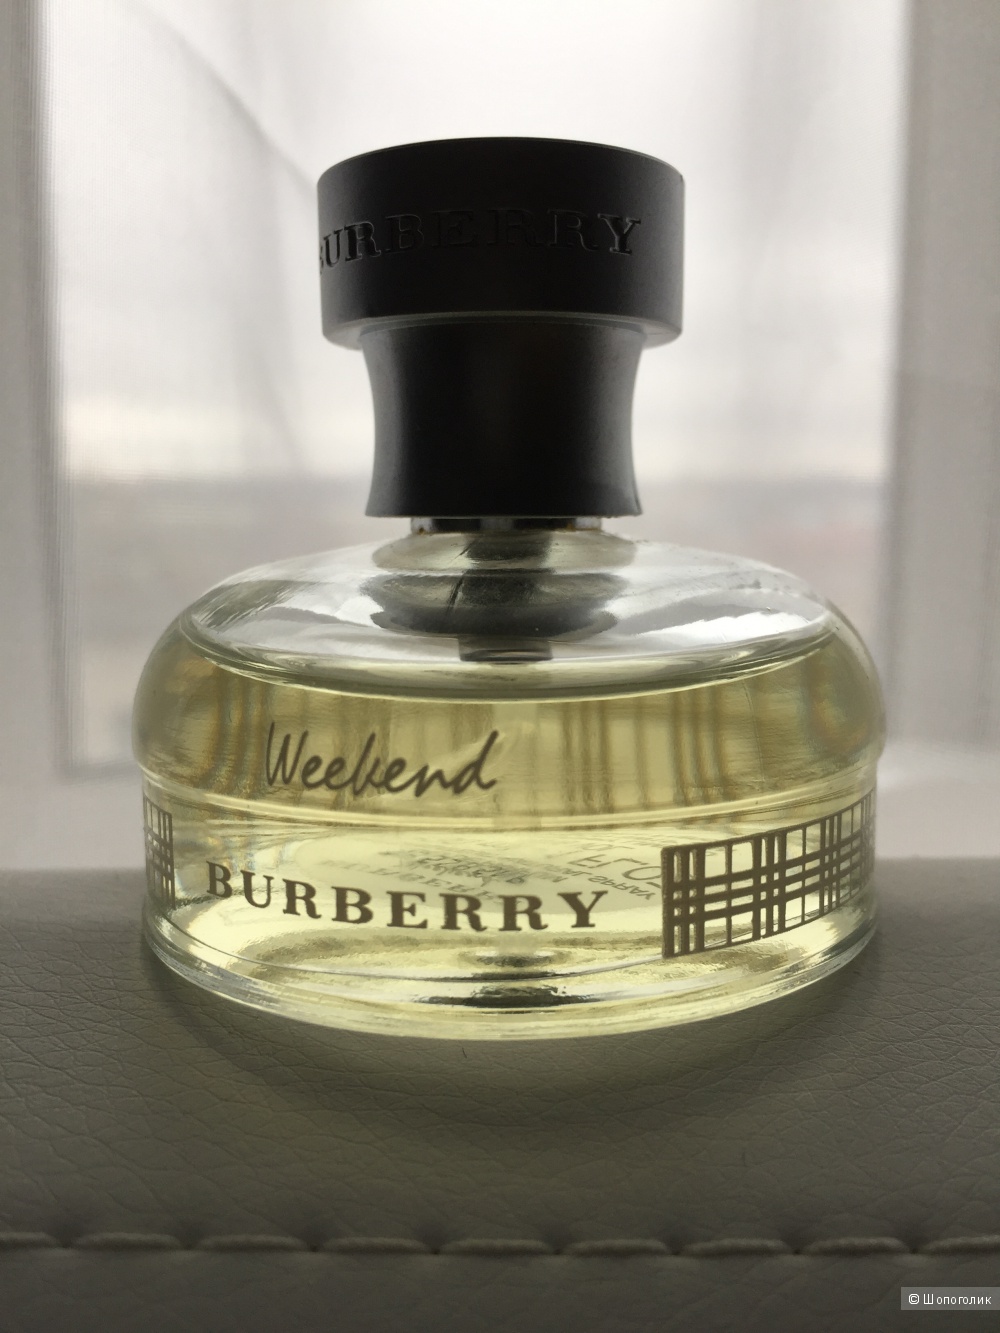 Burberry Weekend парфюмированная вода, 30 мл